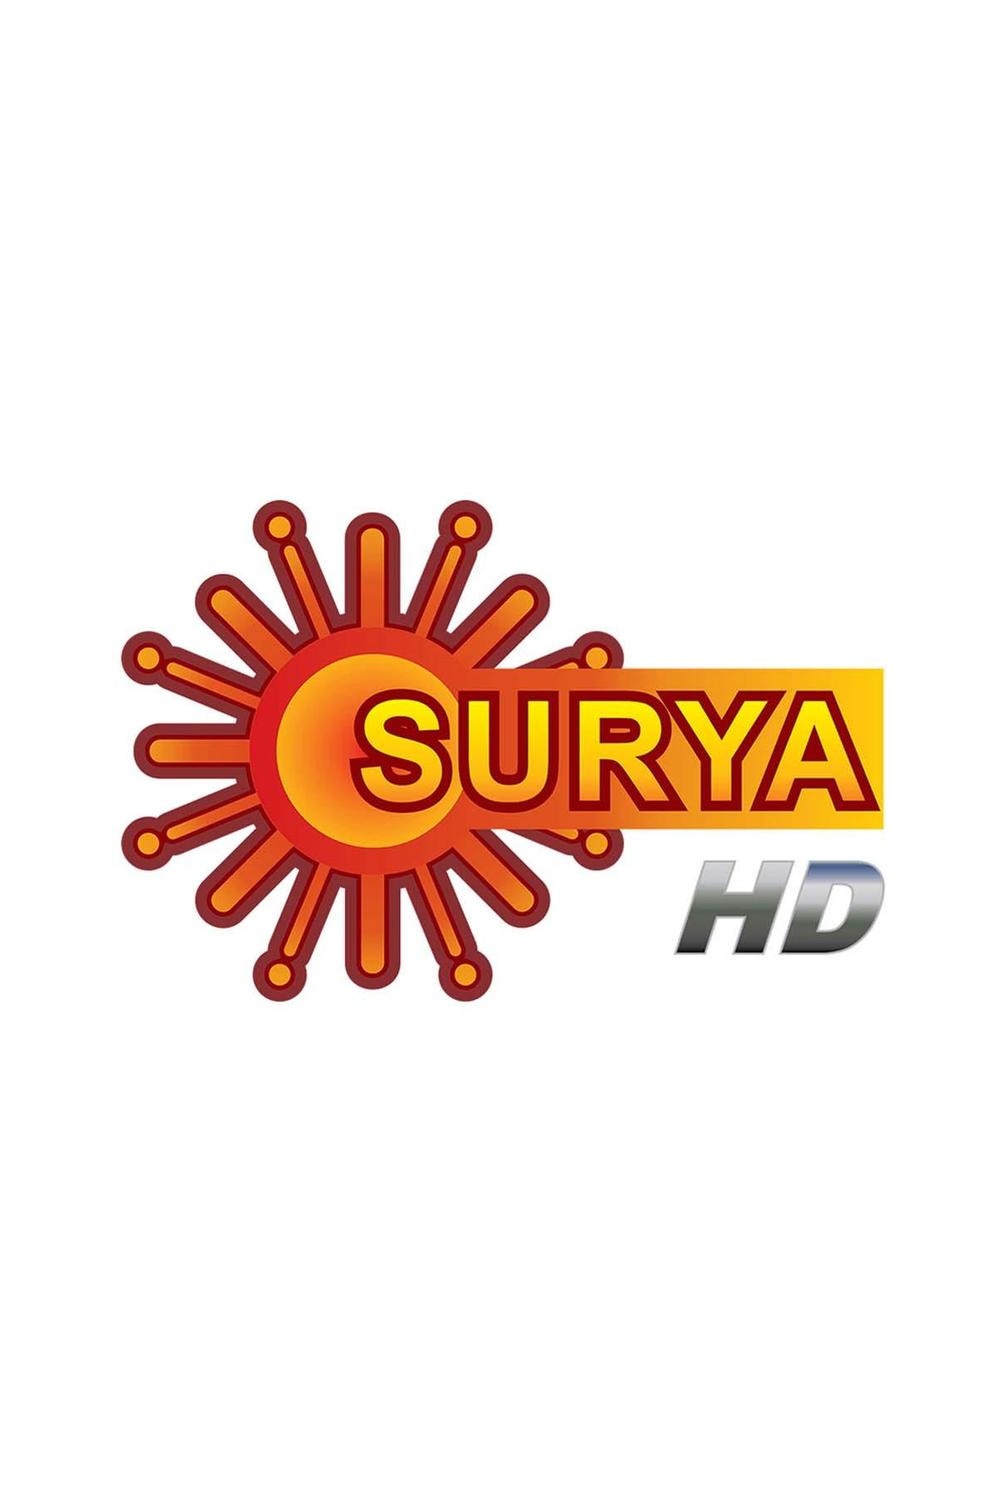 Surya TV HD Online | Surya TV HD Live | Watch Surya TV HD Live